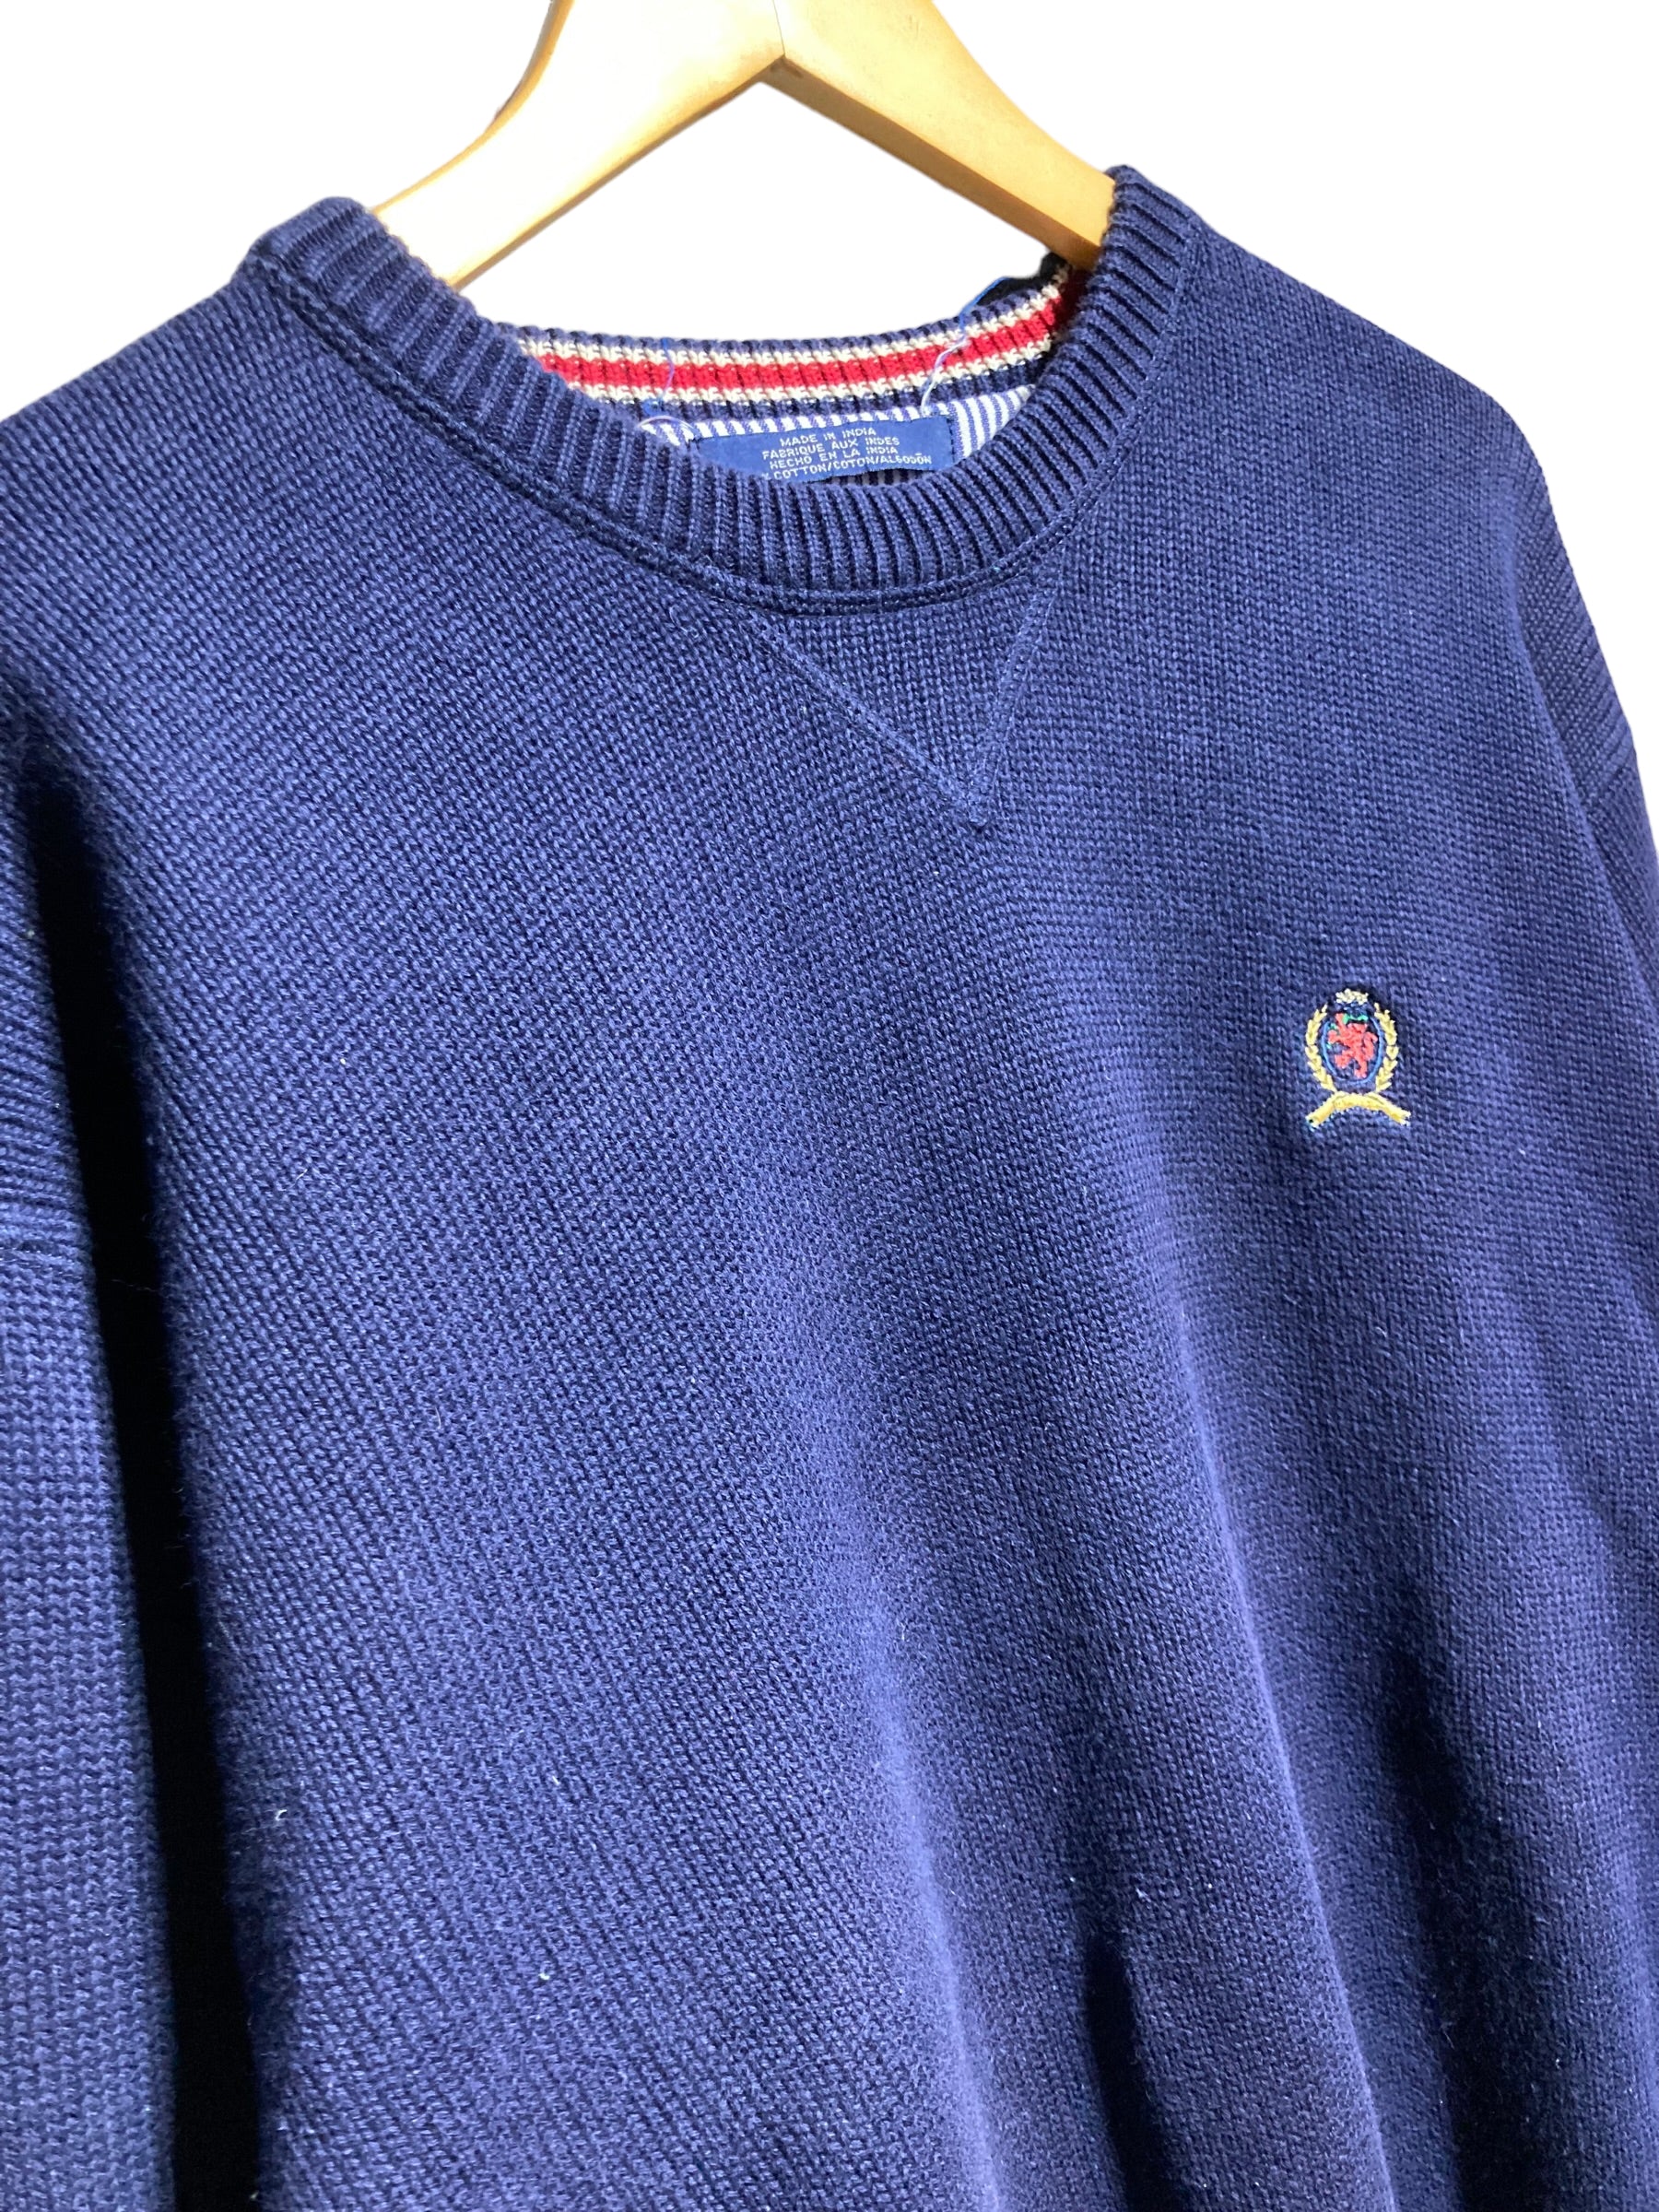 90s TOMMY HILFIGER トミーヒルフィガー knit sweater ニット セーター